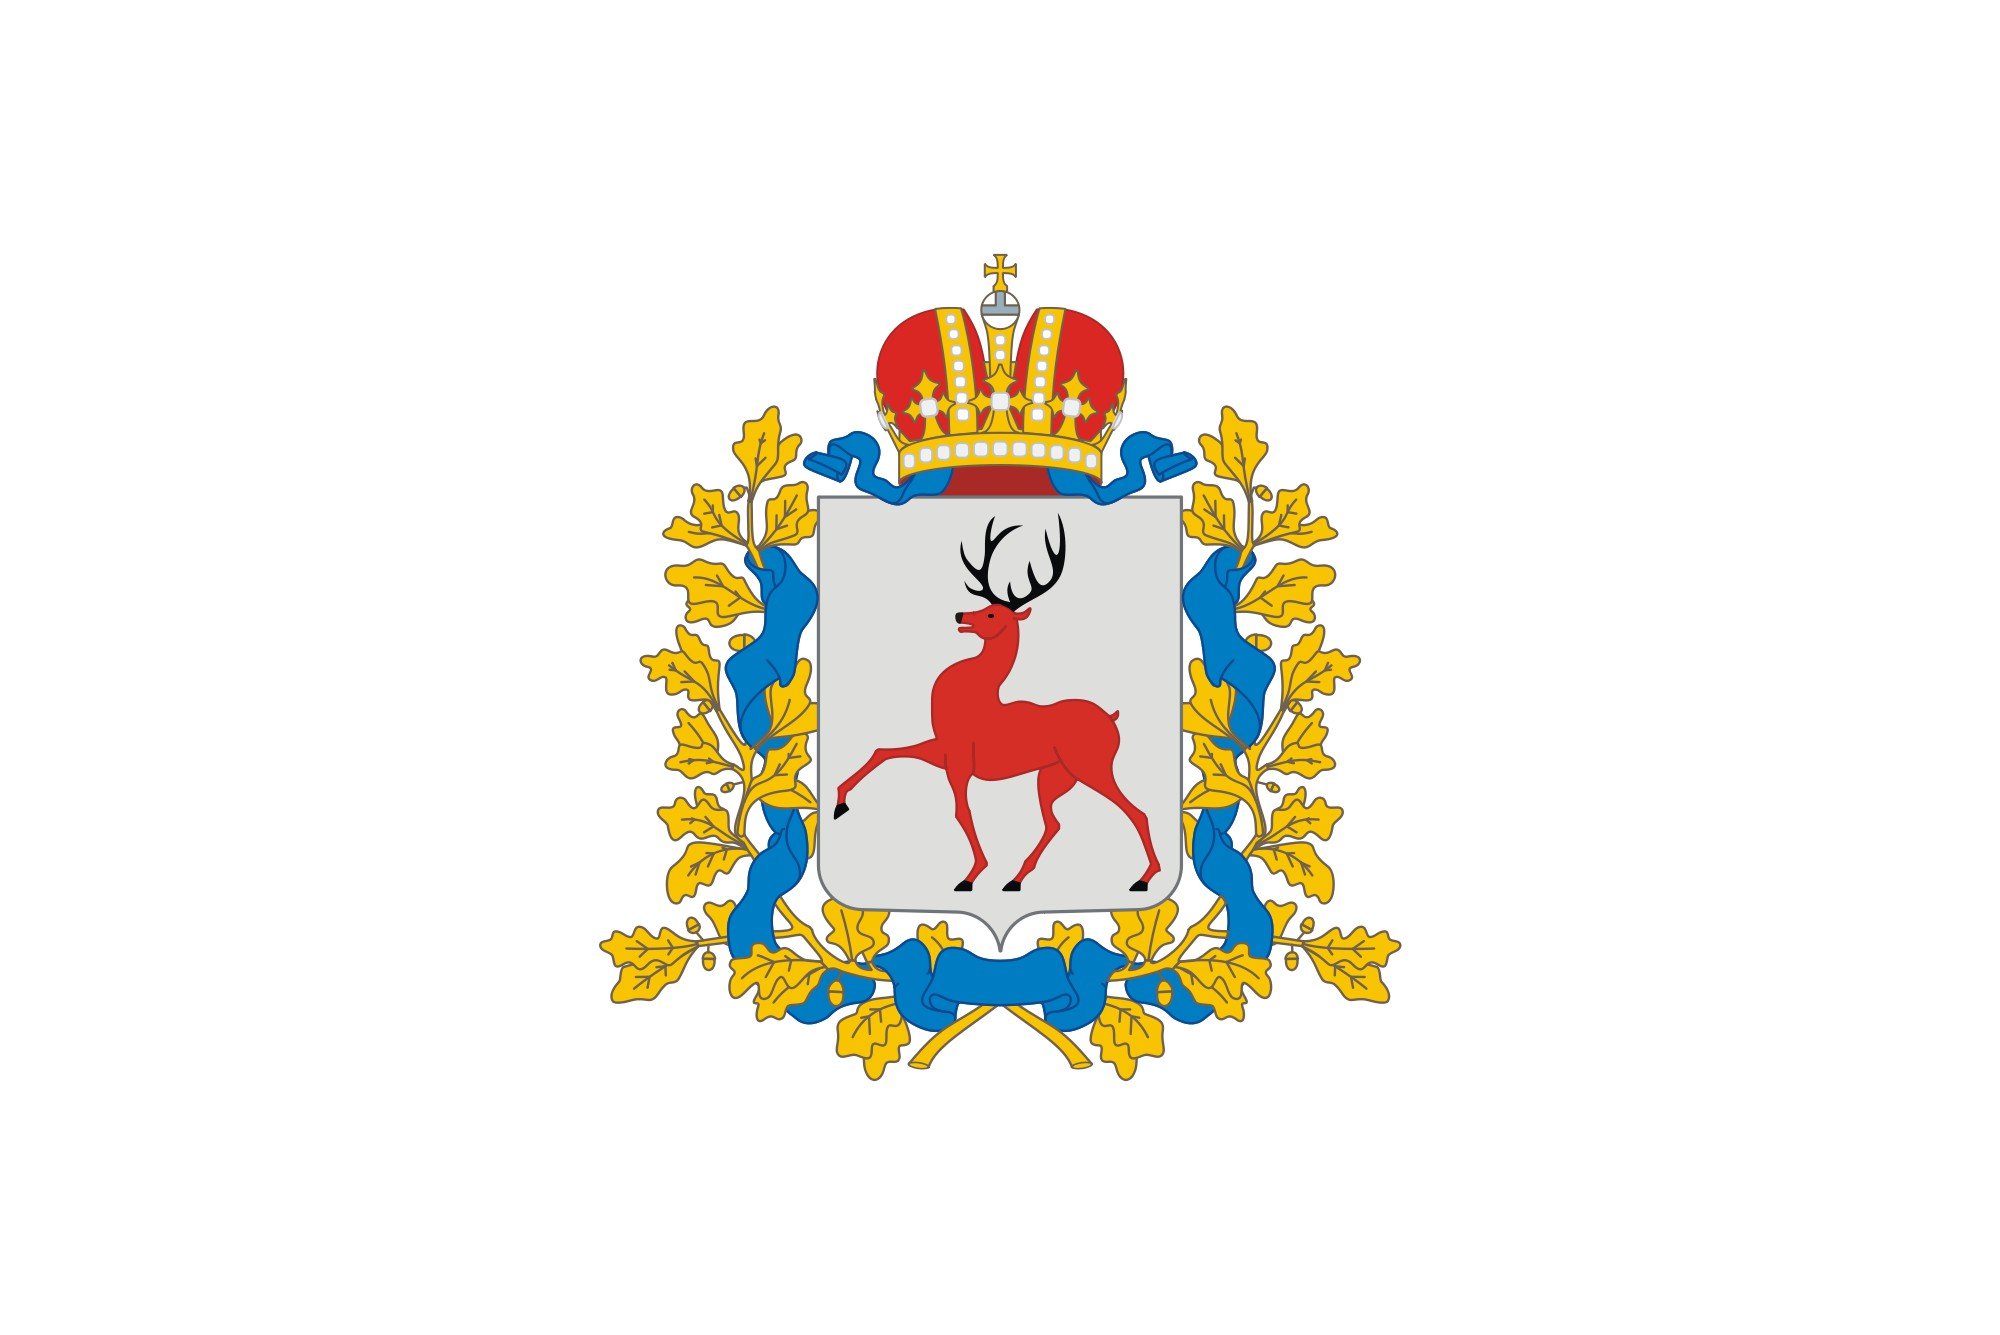 флаг нижегородской области фото